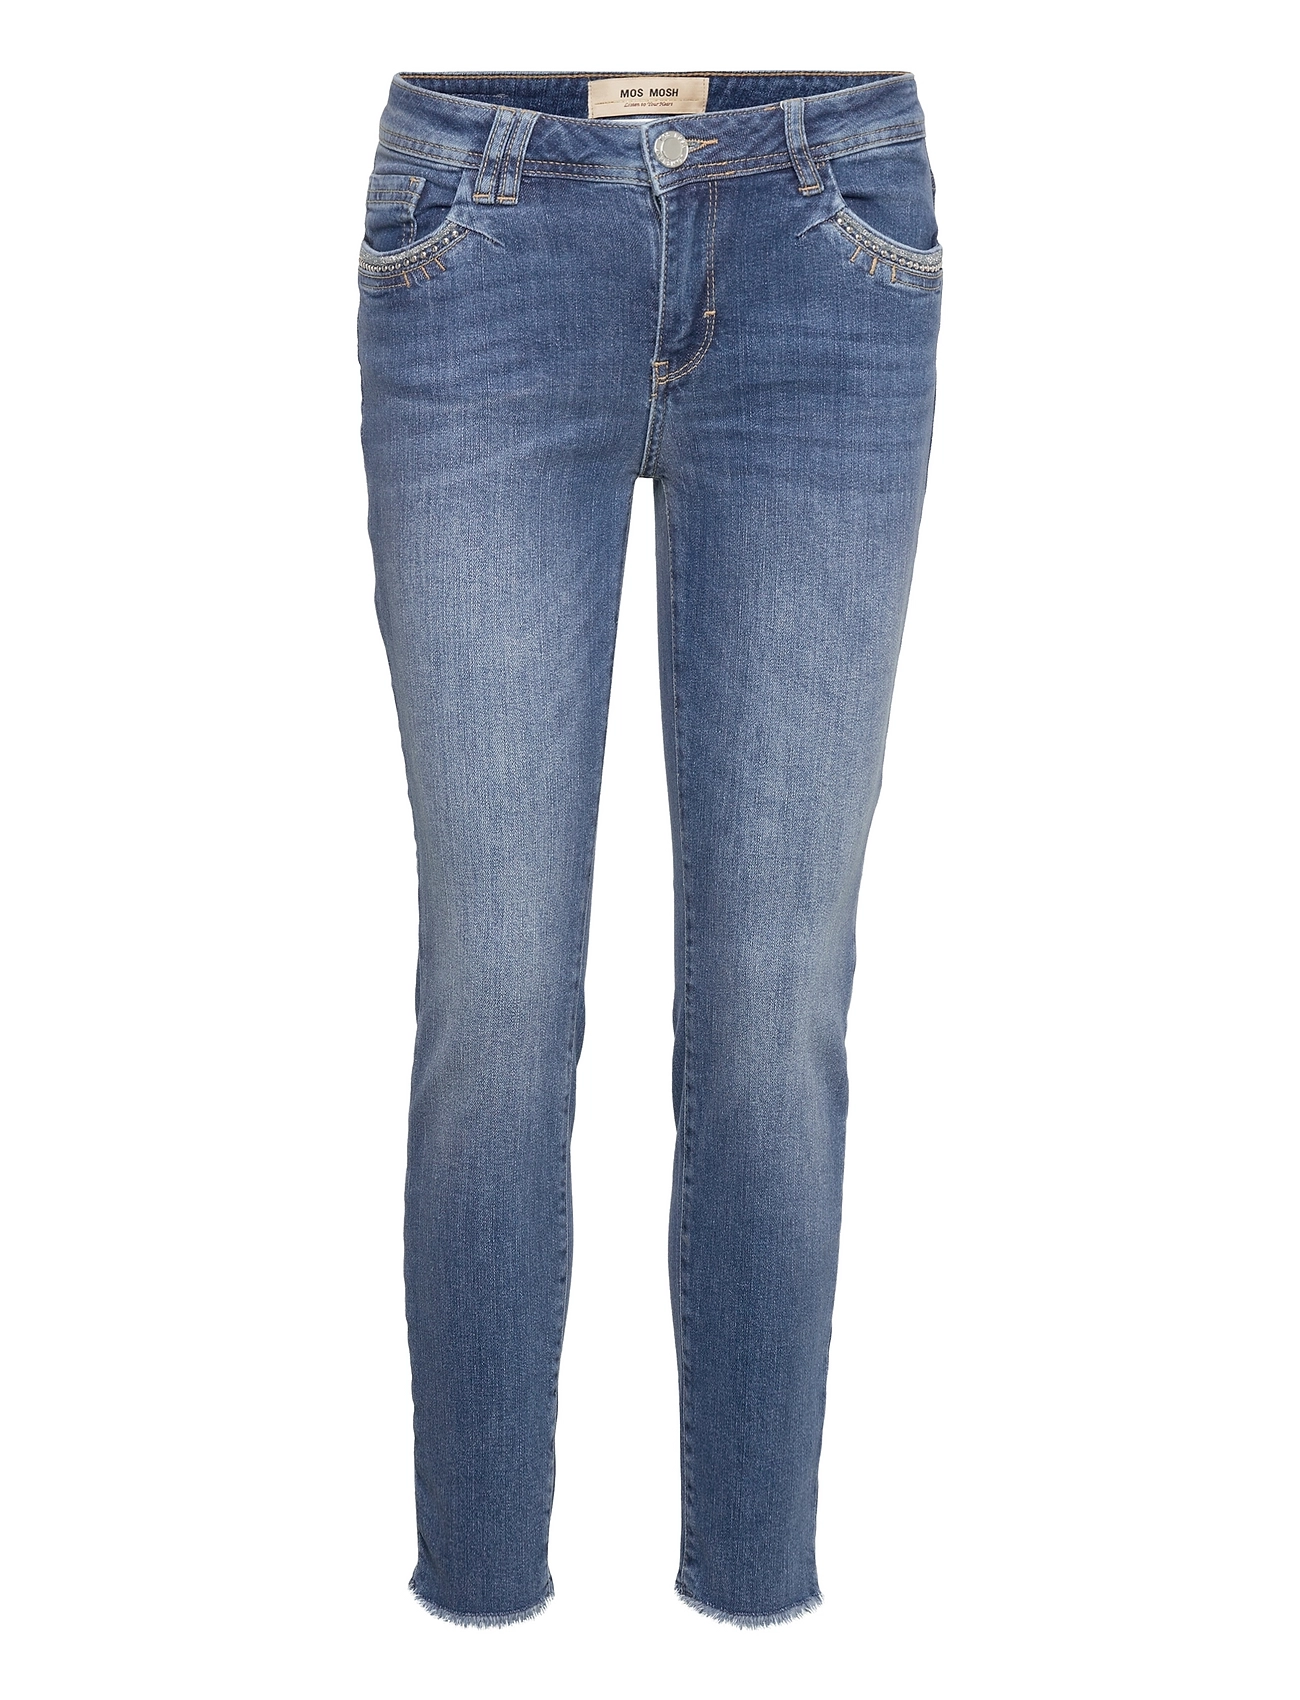 MOS MOSH Sumner Steel Jeans jeans - Boozt.com